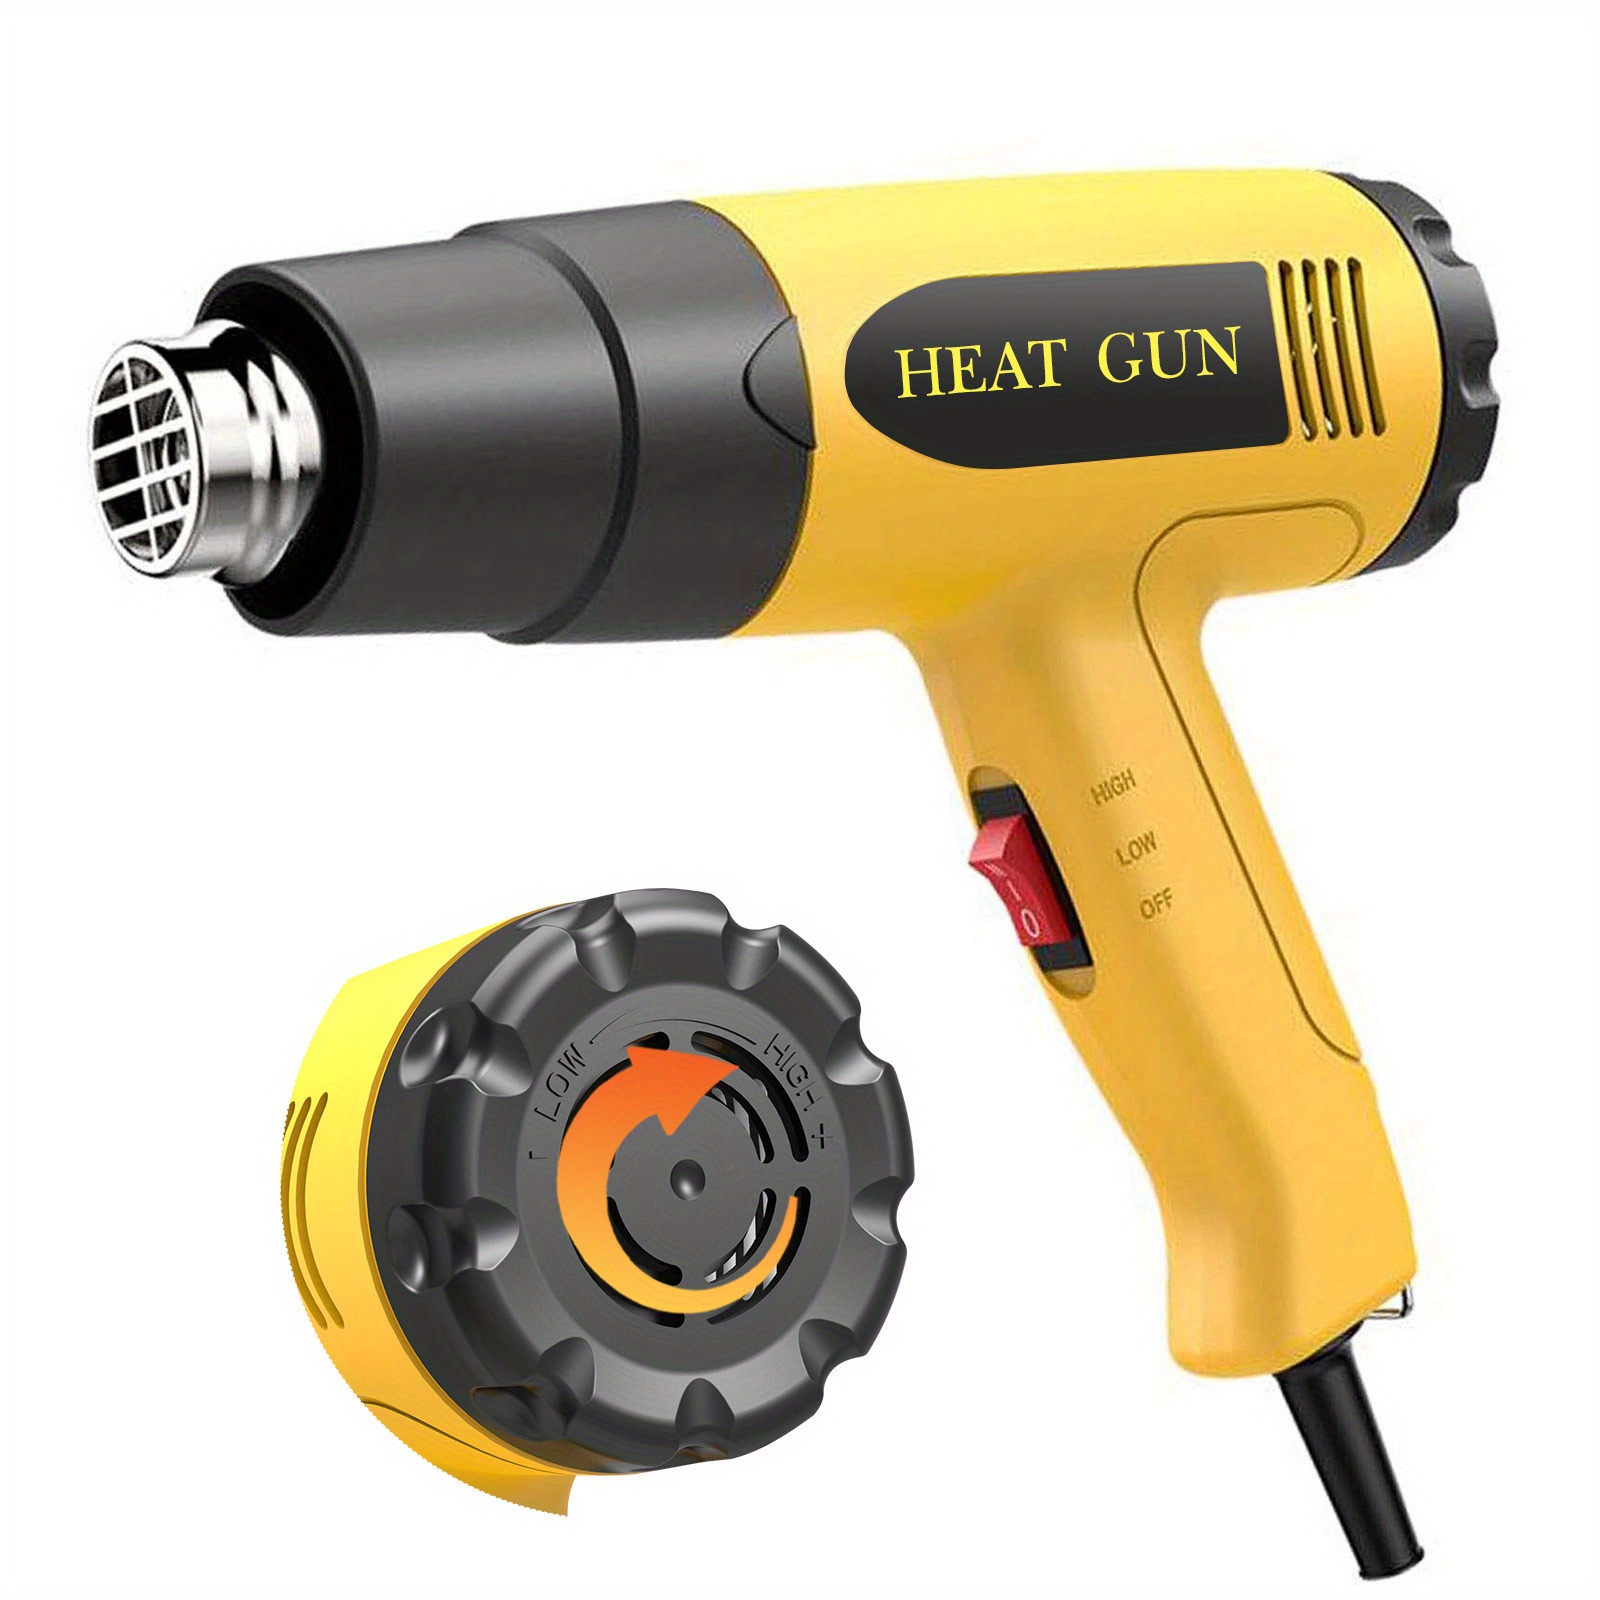 Heat Gun Heat Gun, Heat Gun Crafts